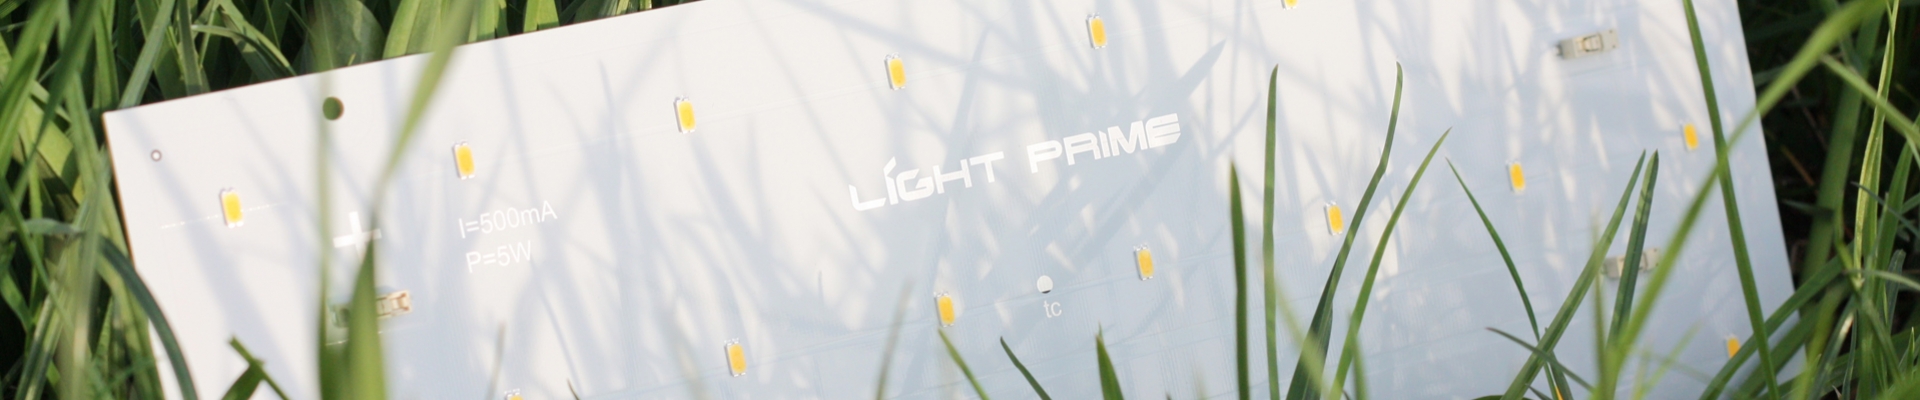 Лайт прайм Light prime